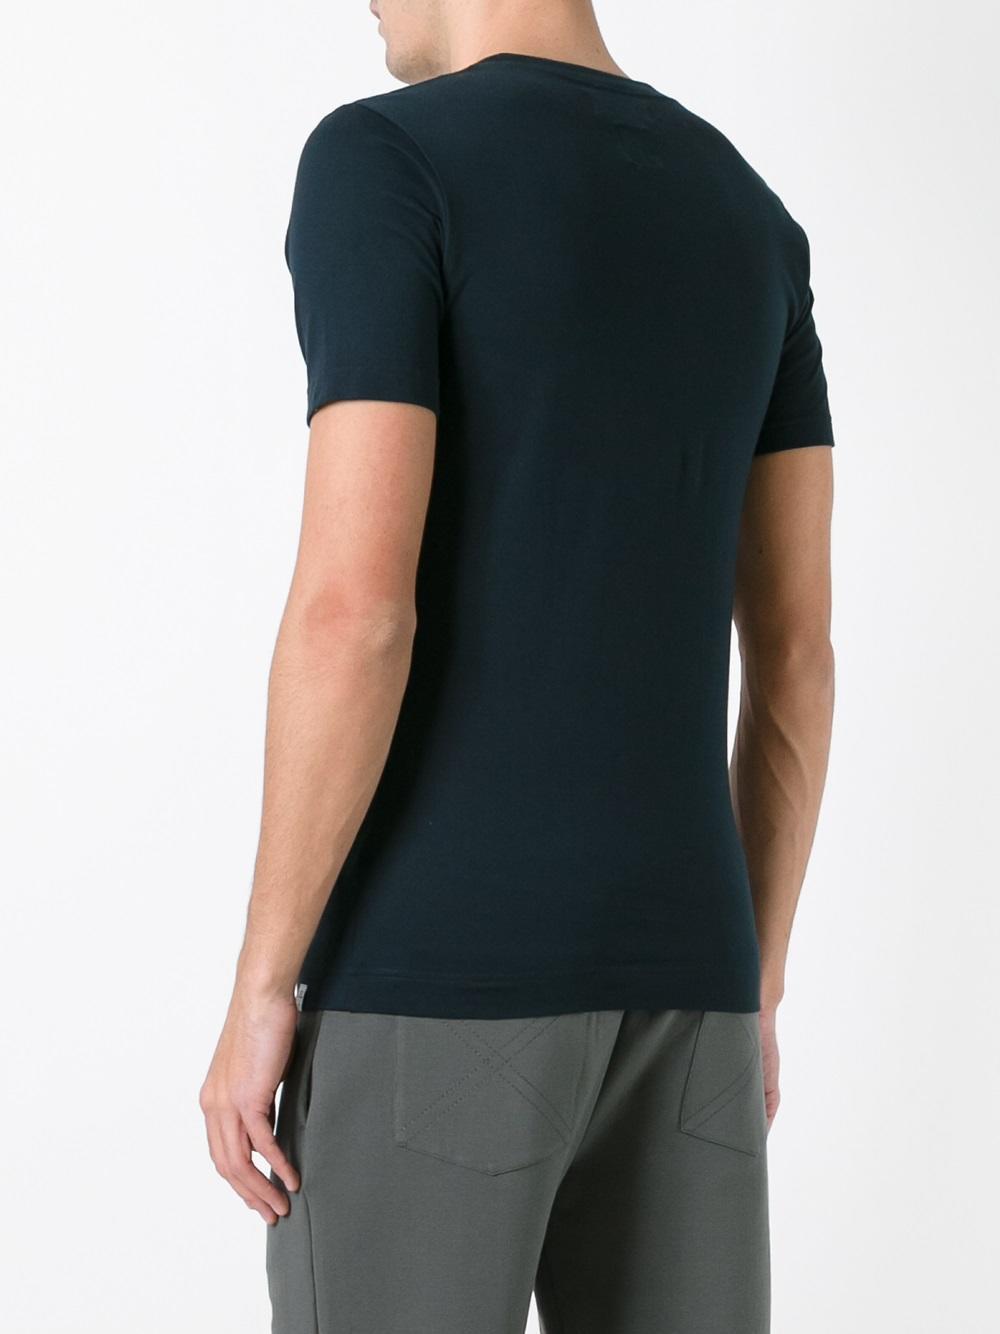 Facetasm Cotton Face Print T-shirt in Black for Men - Lyst